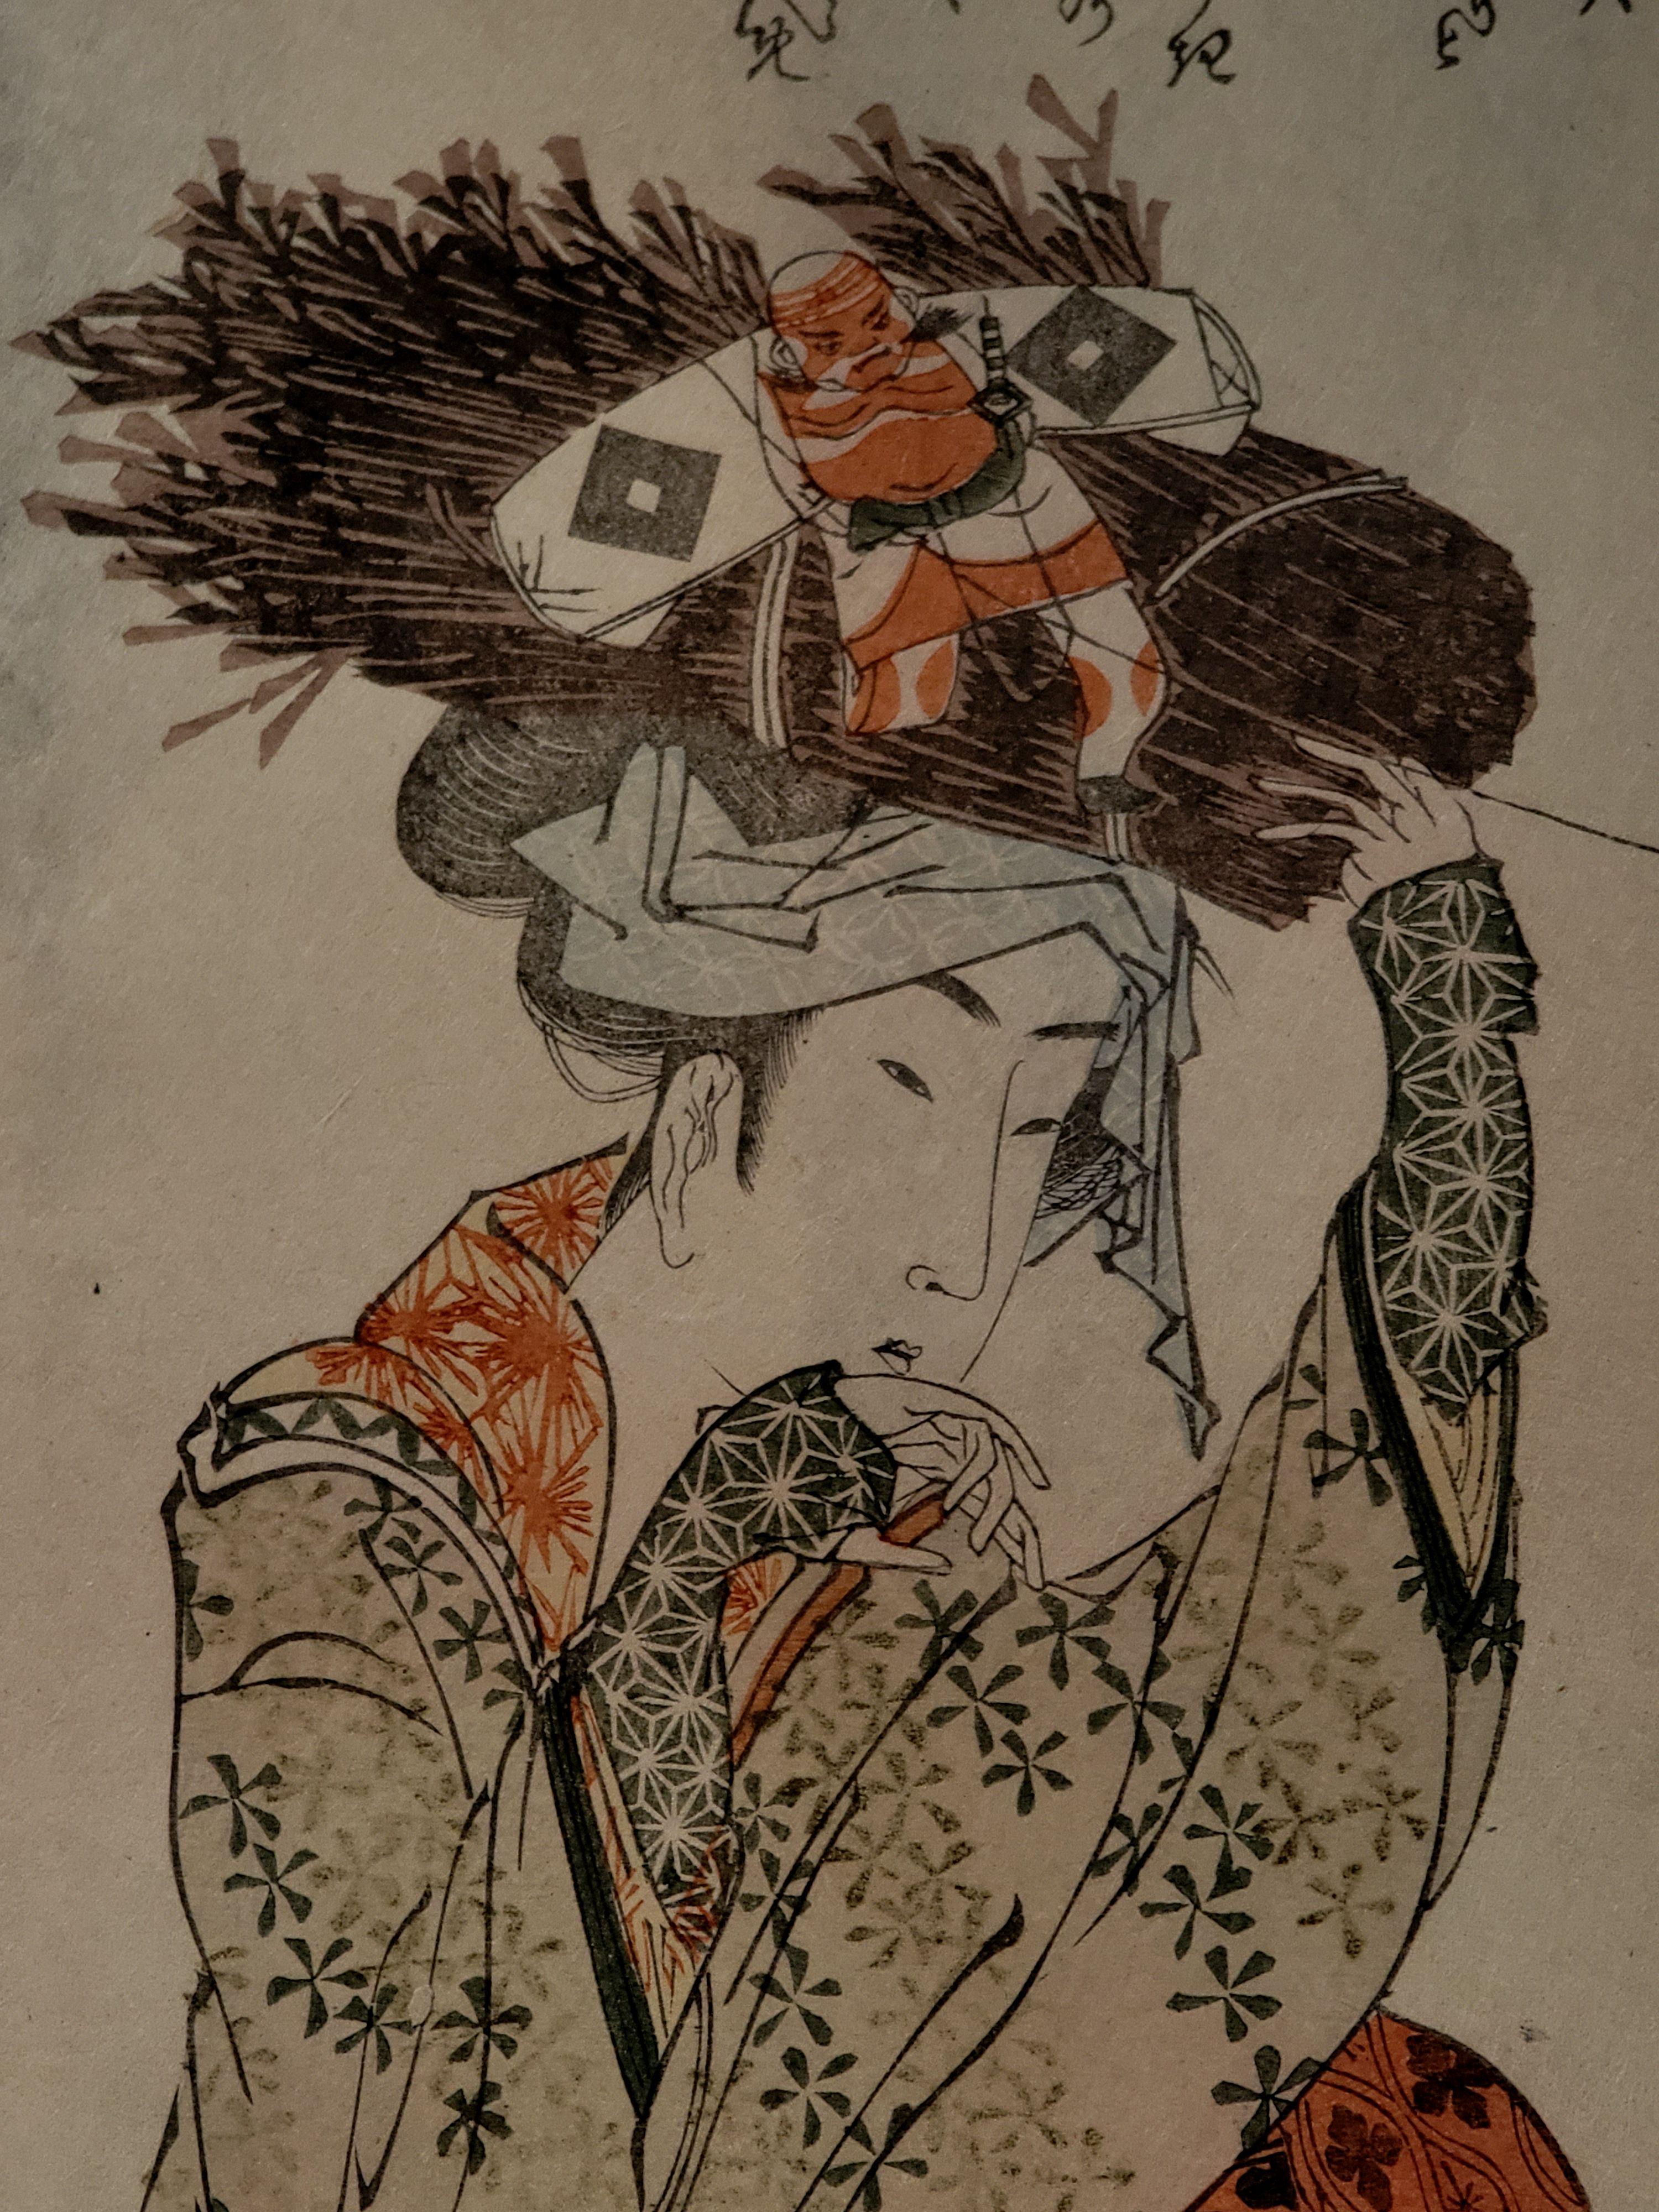 Original Japanese Woodblock print by Hokusai Katsushika, 葛飾北齋 '1760-1849'

About the artist

Japanese artist, Hokusai Katsushika, was born in Edo as Tamekazu Nakajima. Adopted by the mirror maker Ise Nakajima, Hokusai was raised as an artisan,